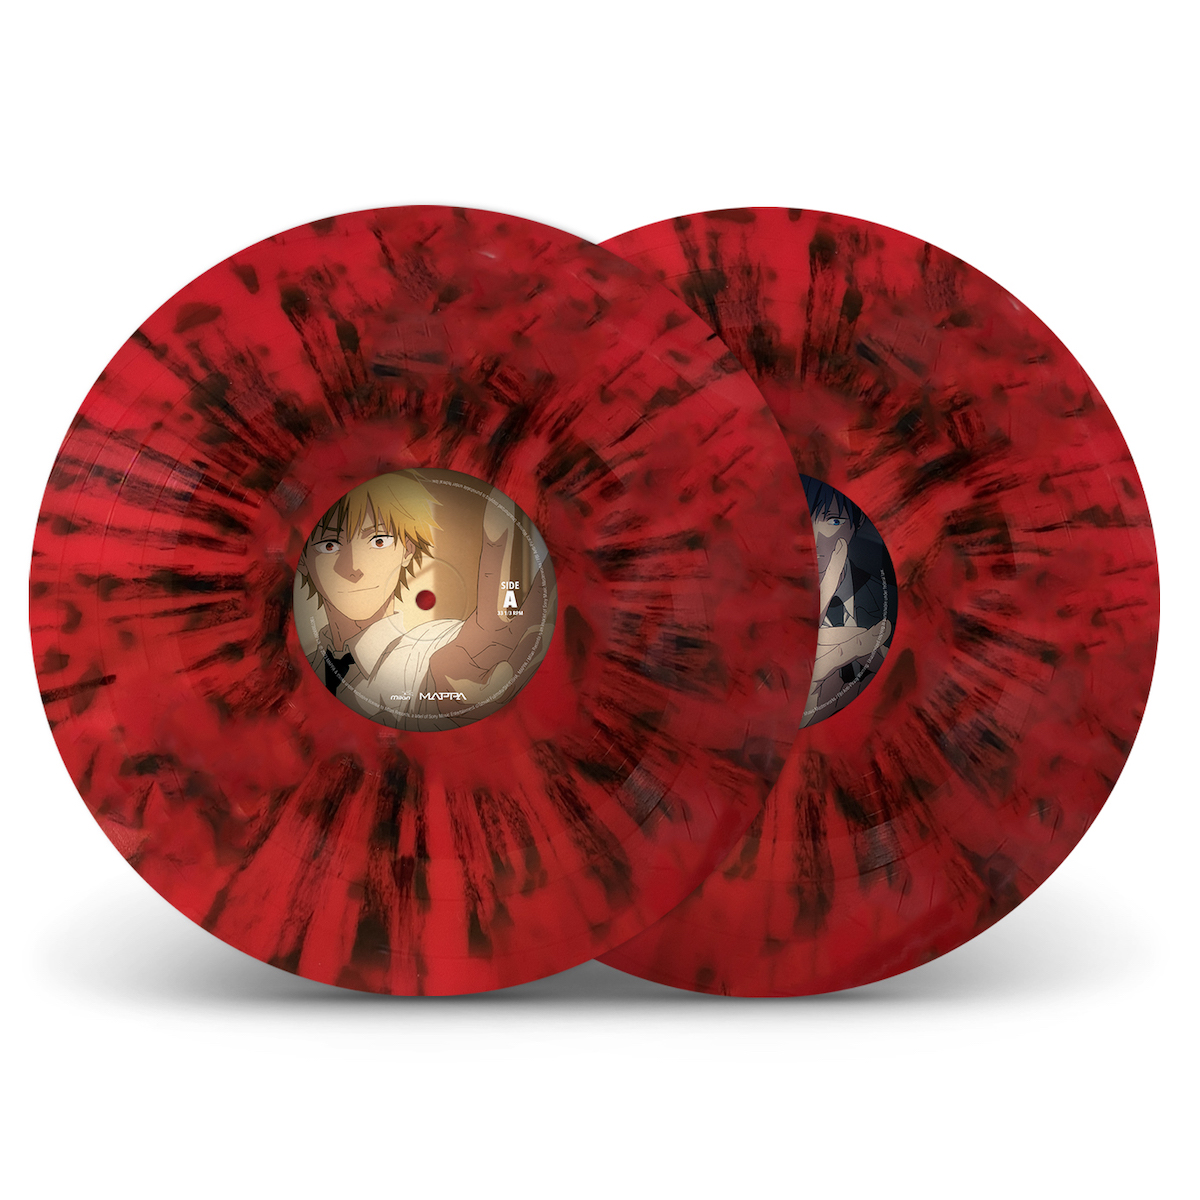 Chainsaw Man - Original Series Soundtrack Vinyl image count 1